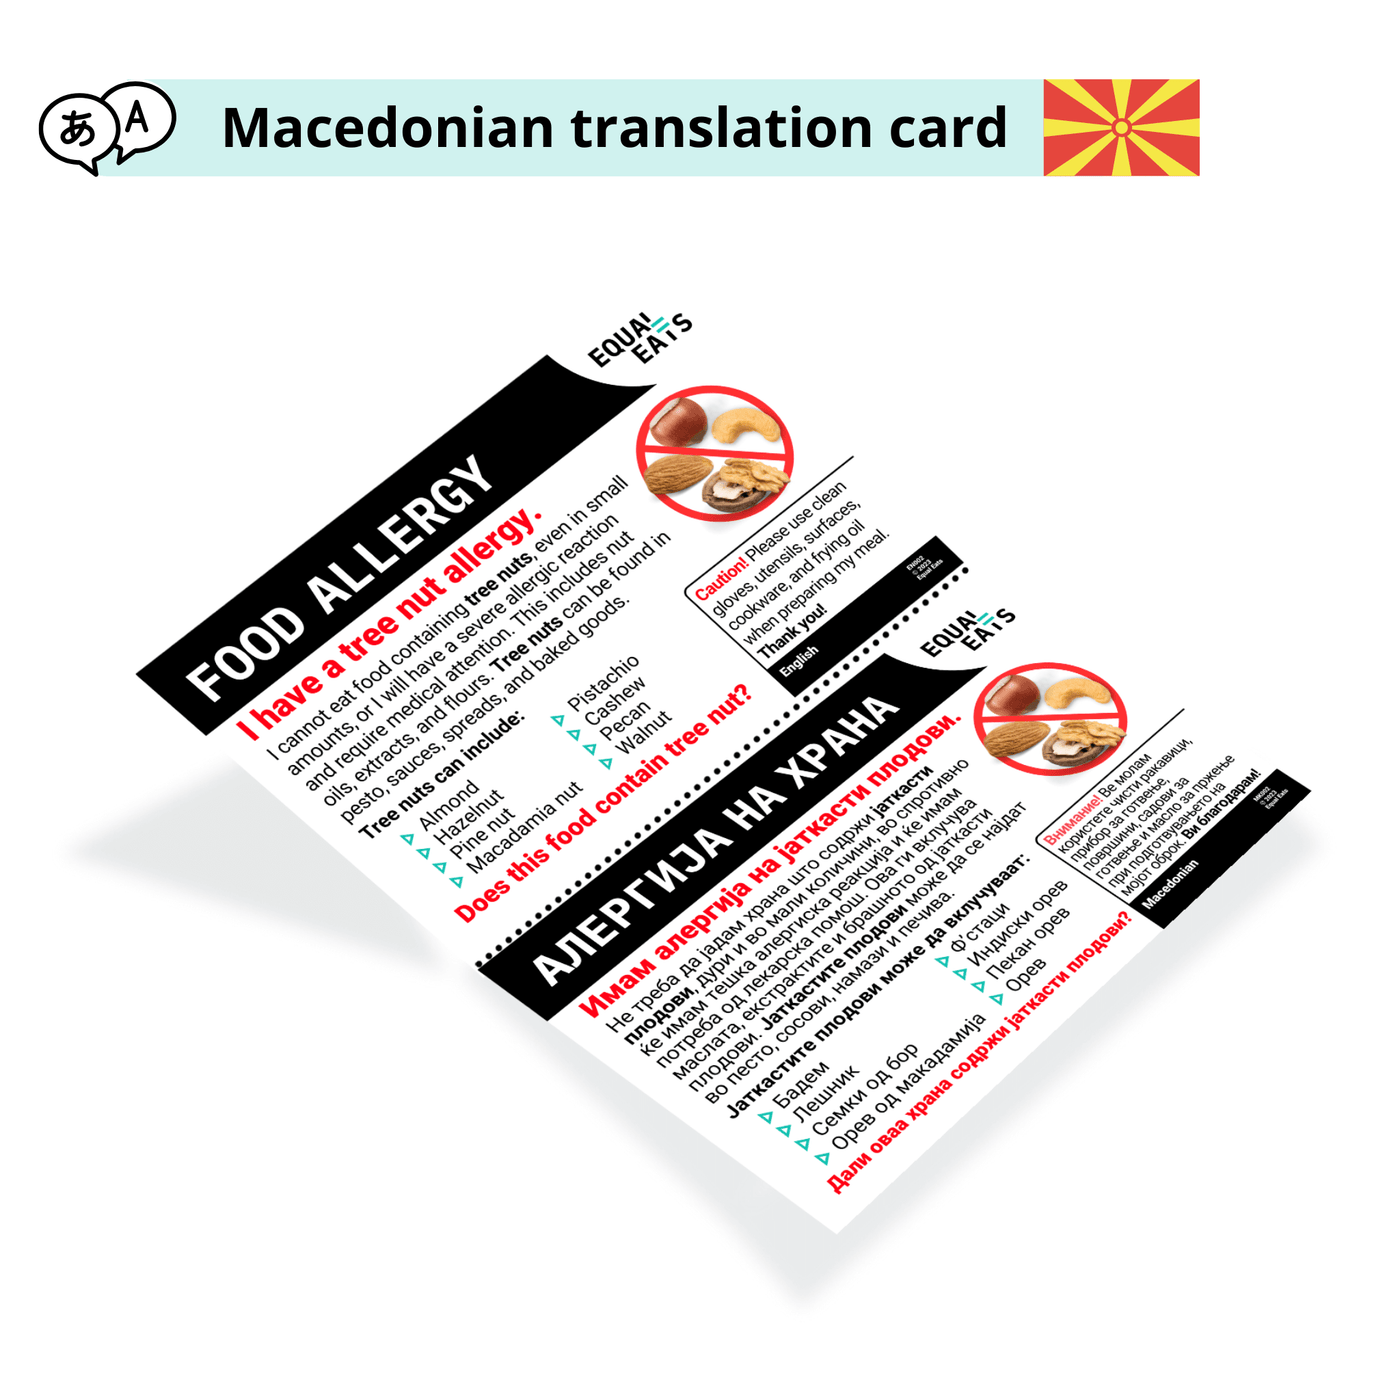 Macedonian Tree Nut Allergy Card